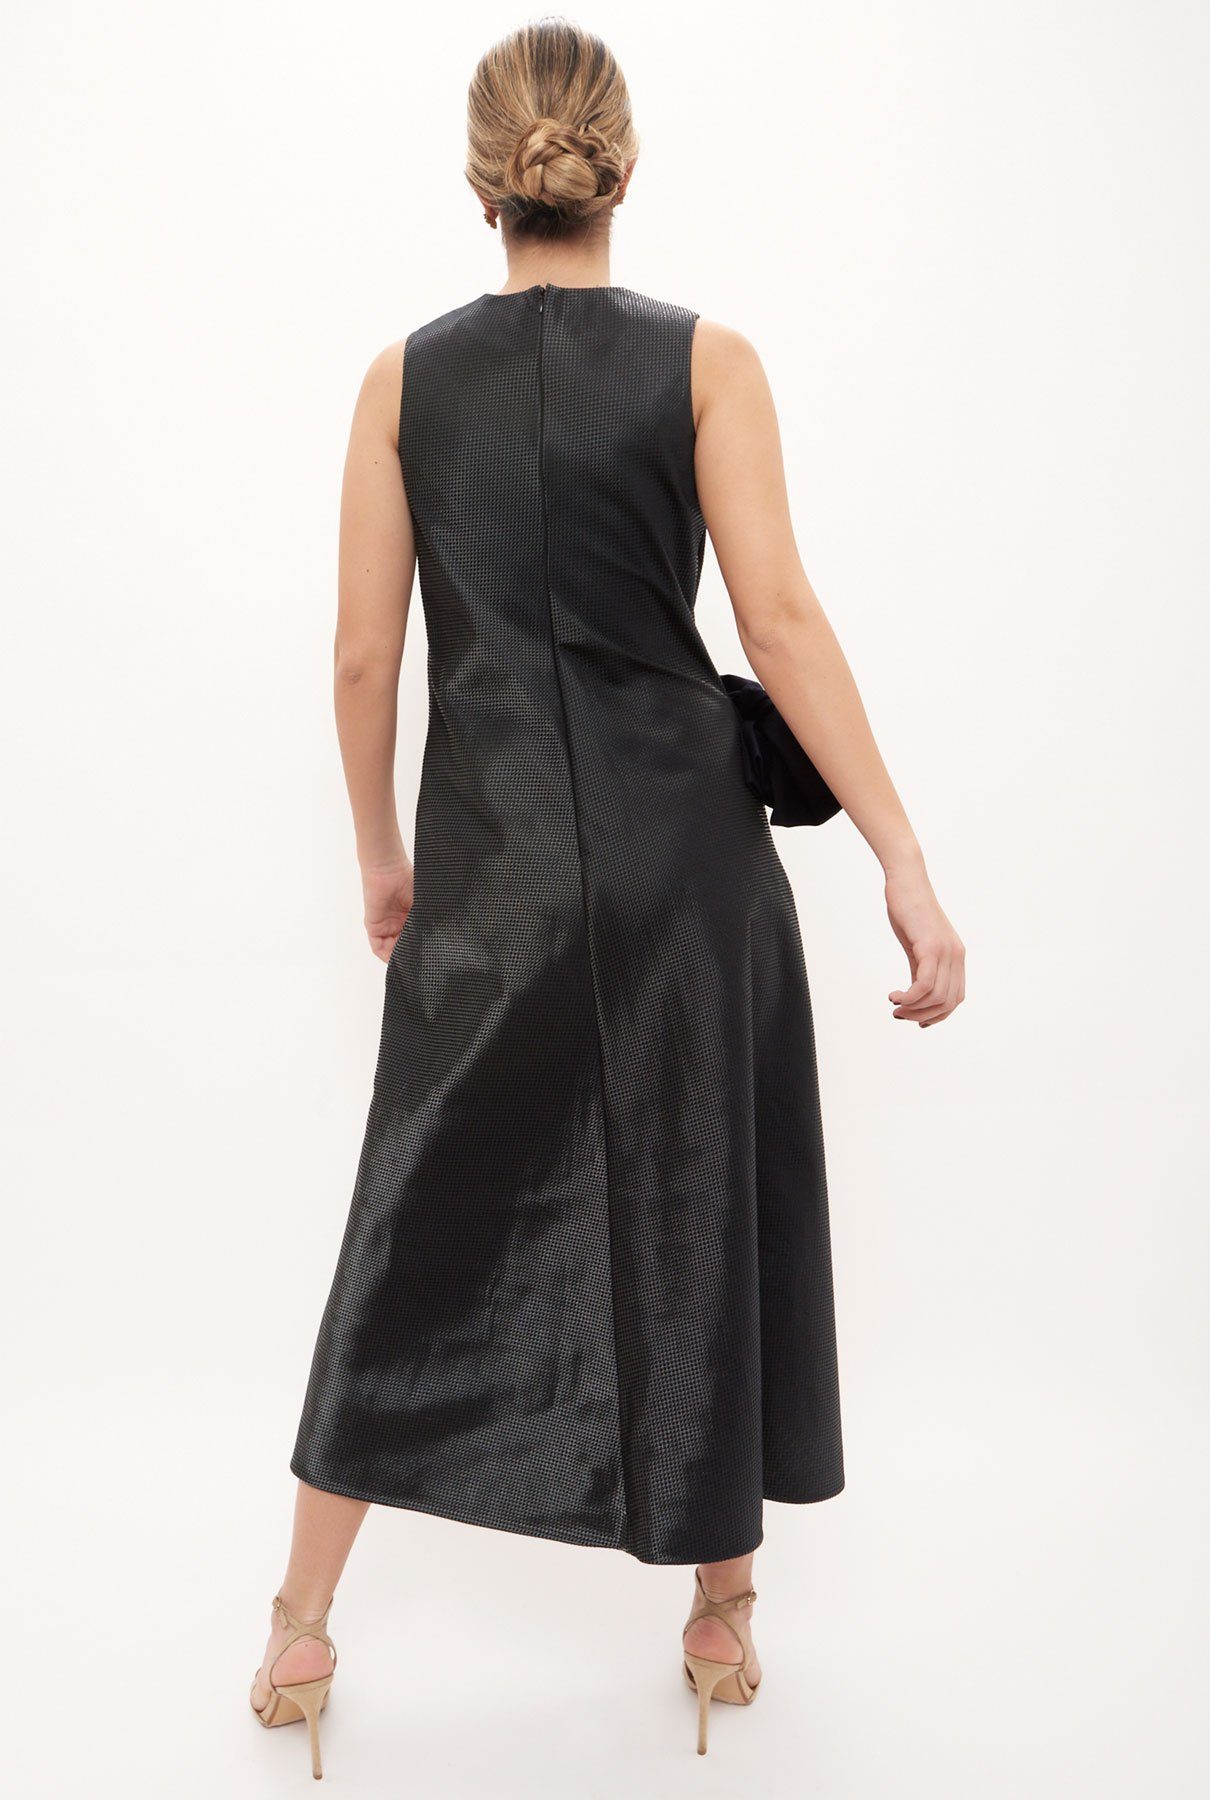 Vestido semientallado lazo negro brillante - Pre Order dress Devota & Lomba 